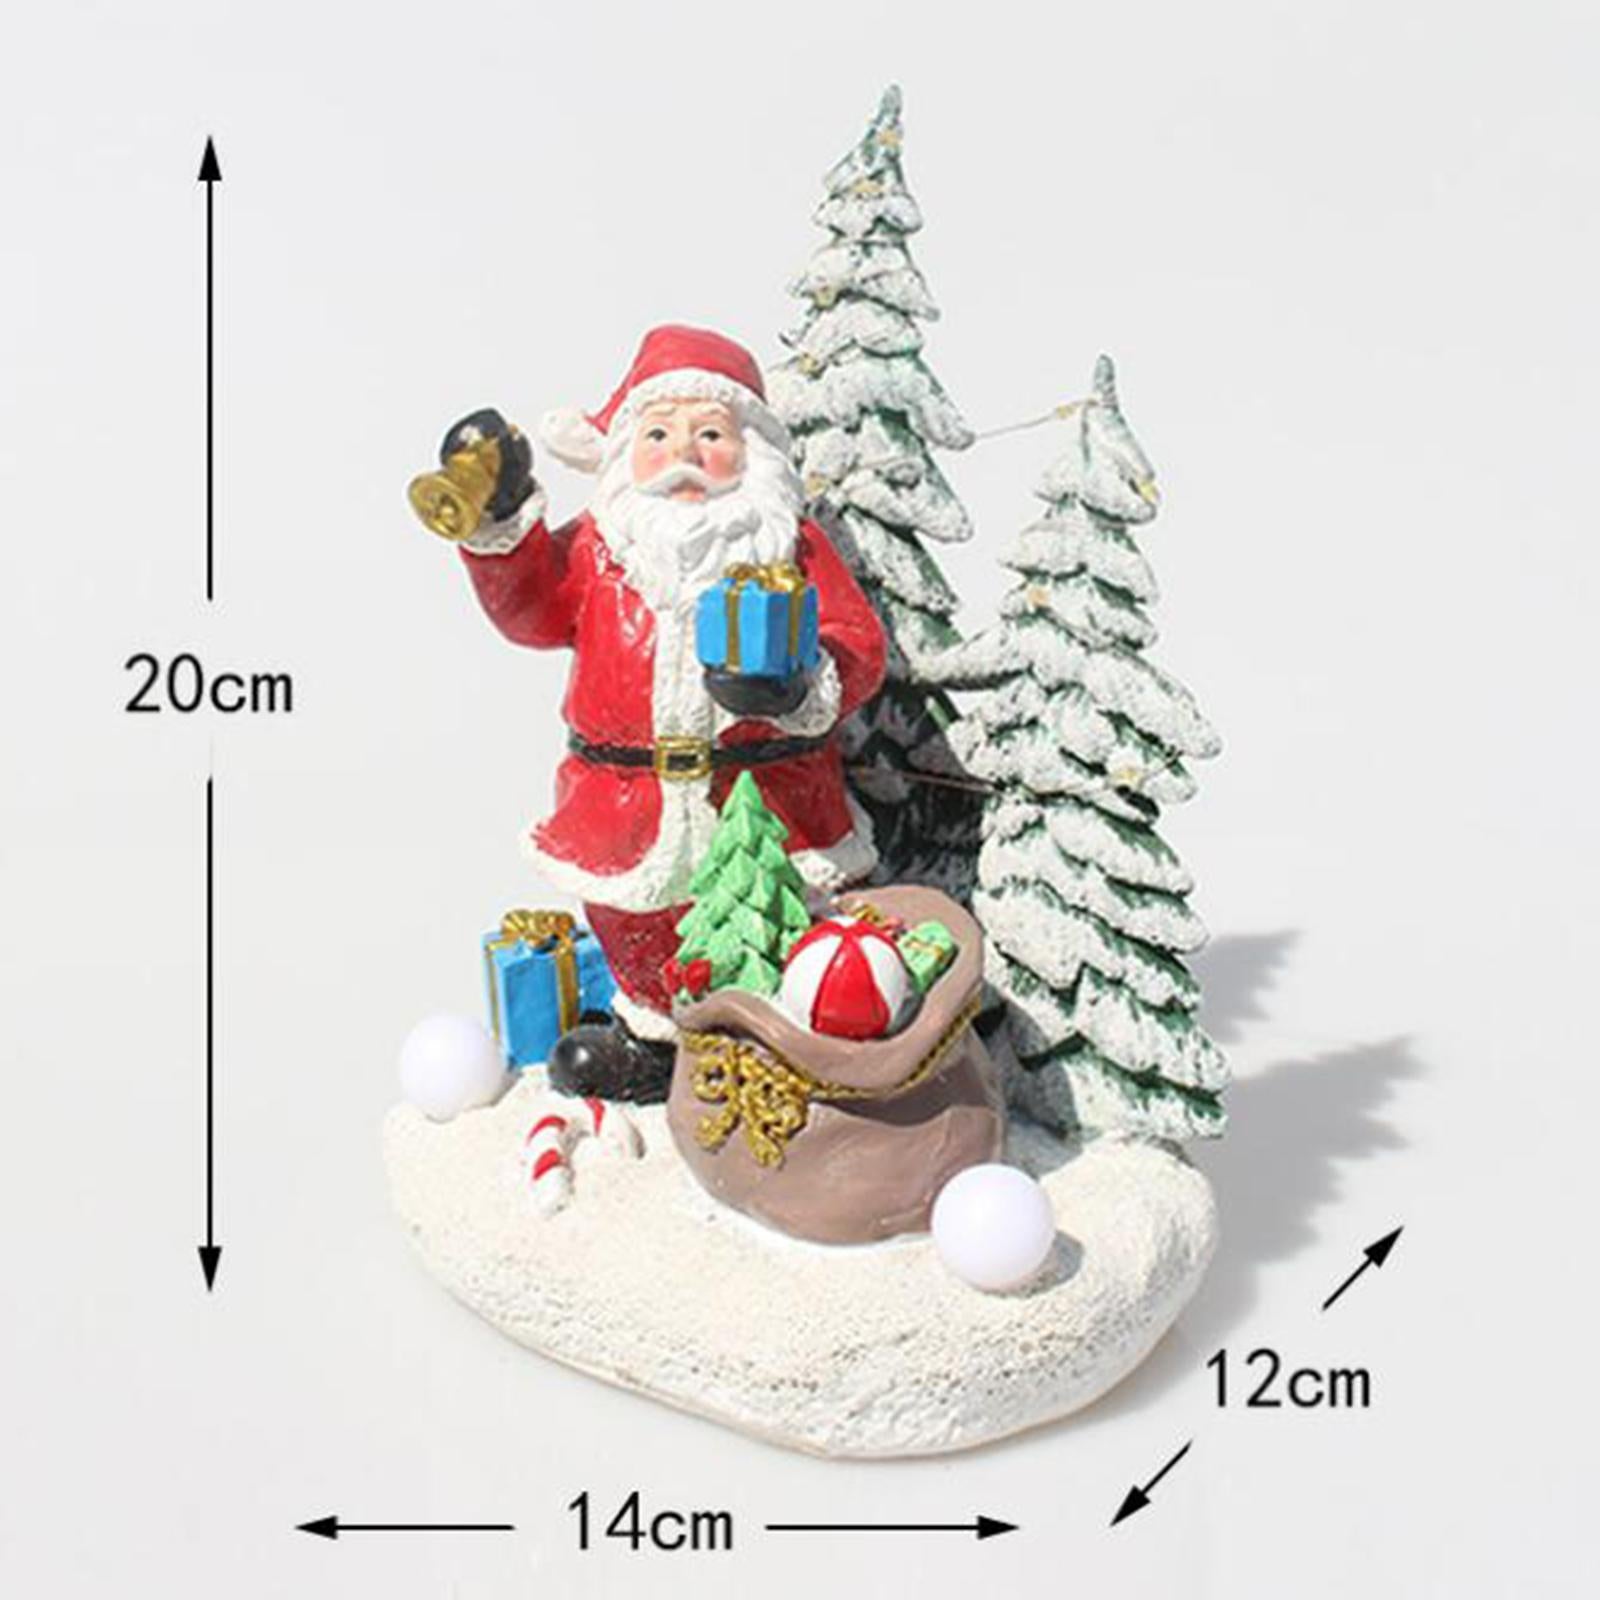 Lighted Christmas Miniature Figurines Toys DIY Accessories Doll House Decor Santa Claus